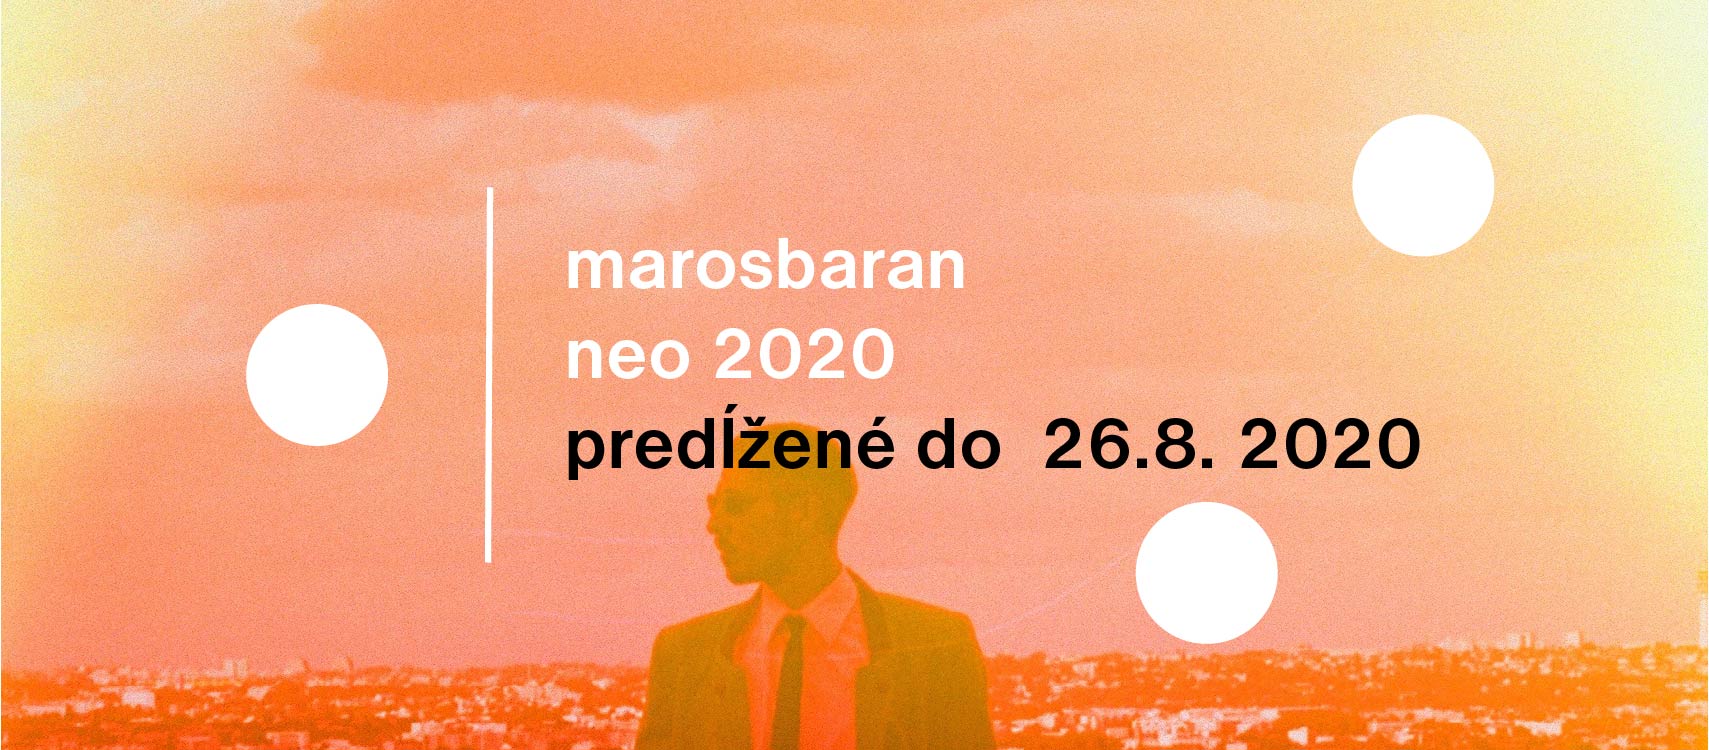 marosbaran – neo 2020